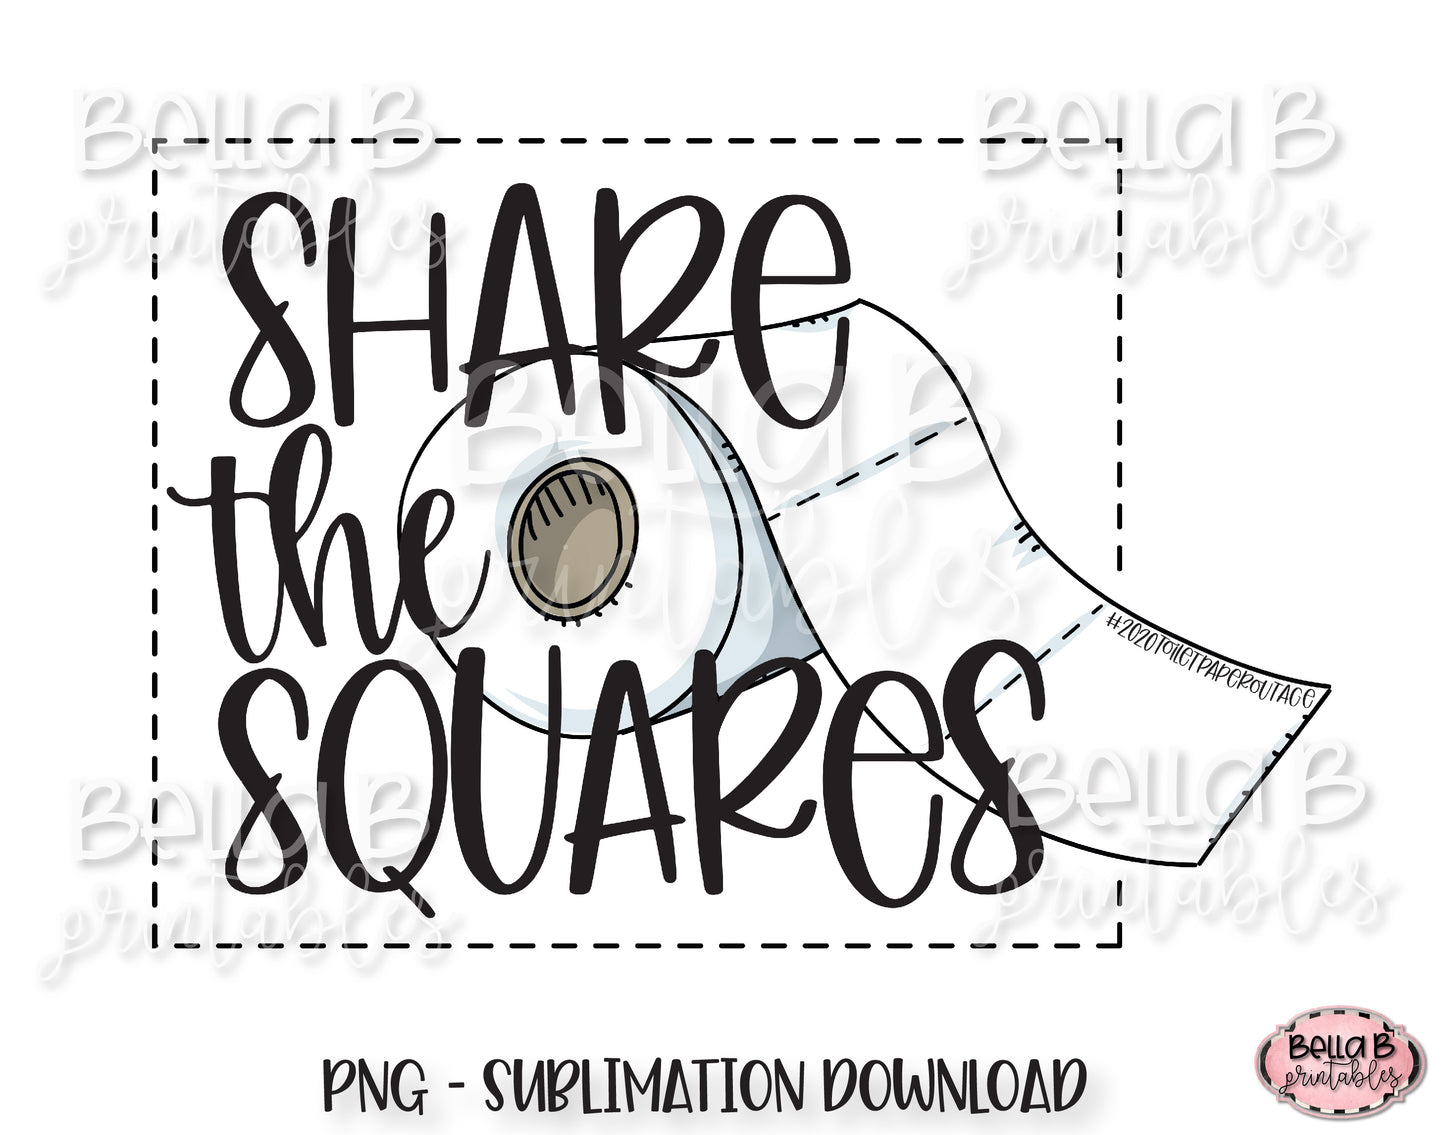 Share The Squares Sublimation Design, 2020 Toilet Paper Outage Design